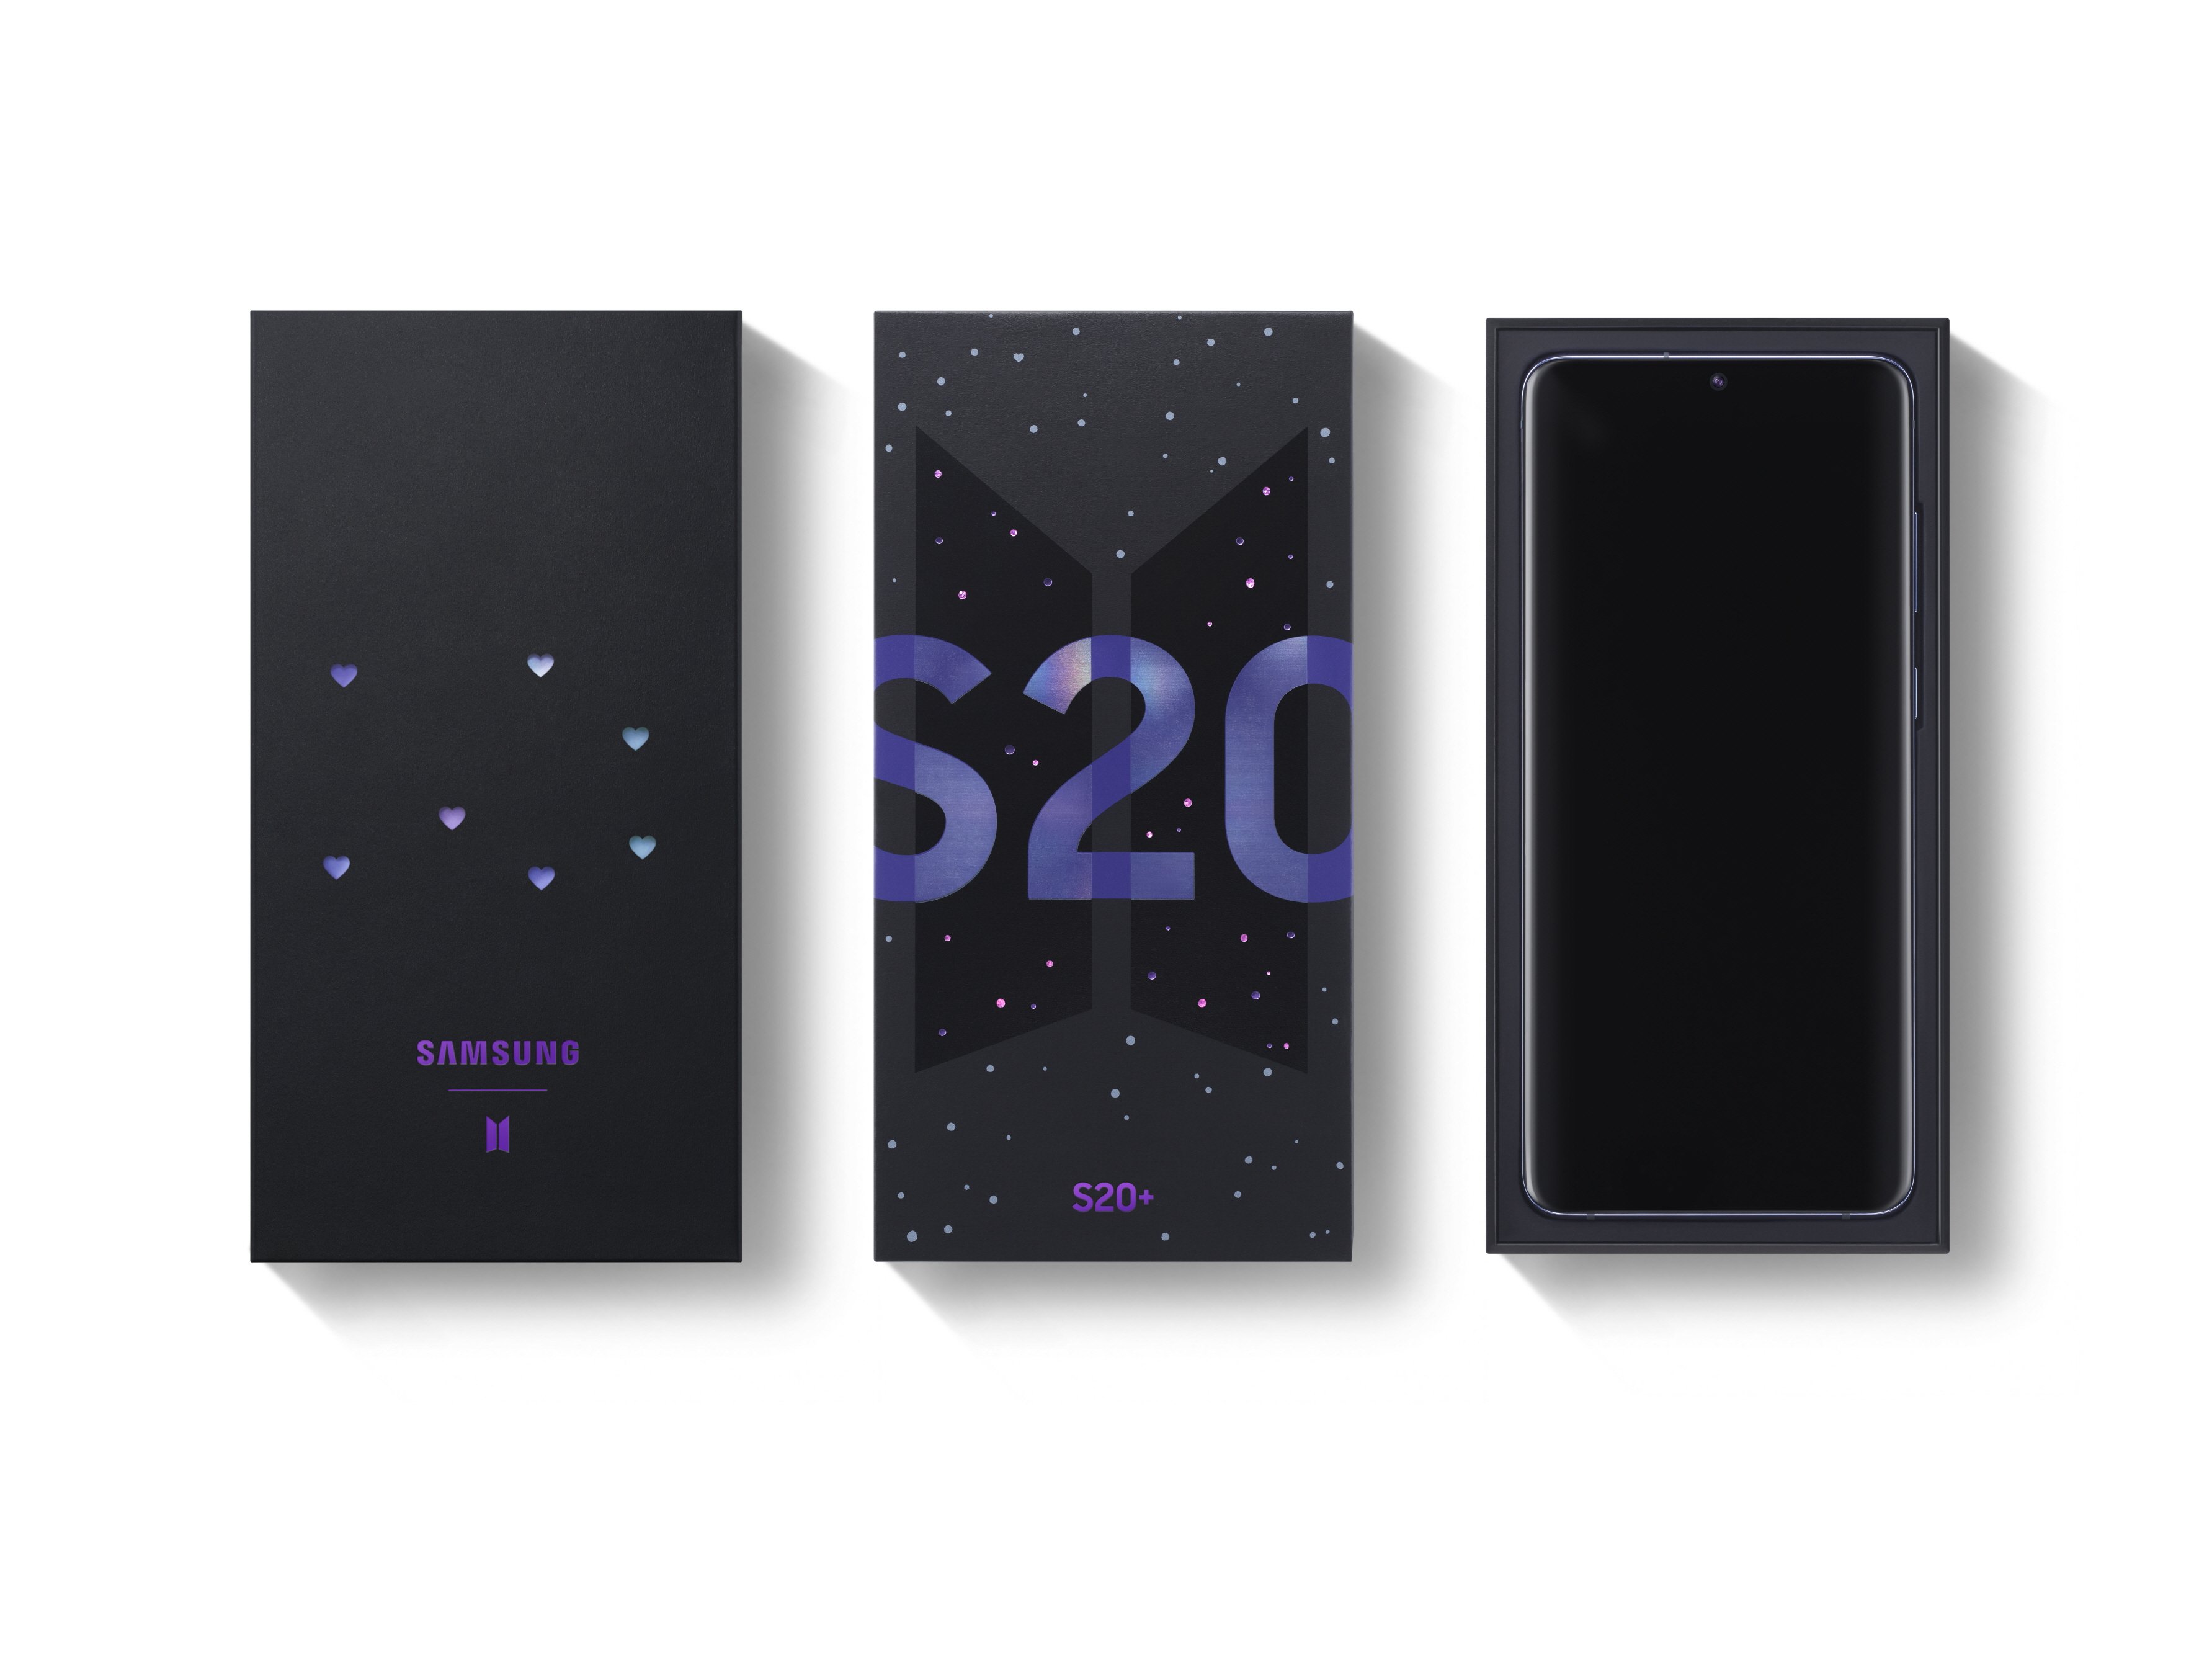 Samsung Galaxy S20+ BTS Edition Box Packaging